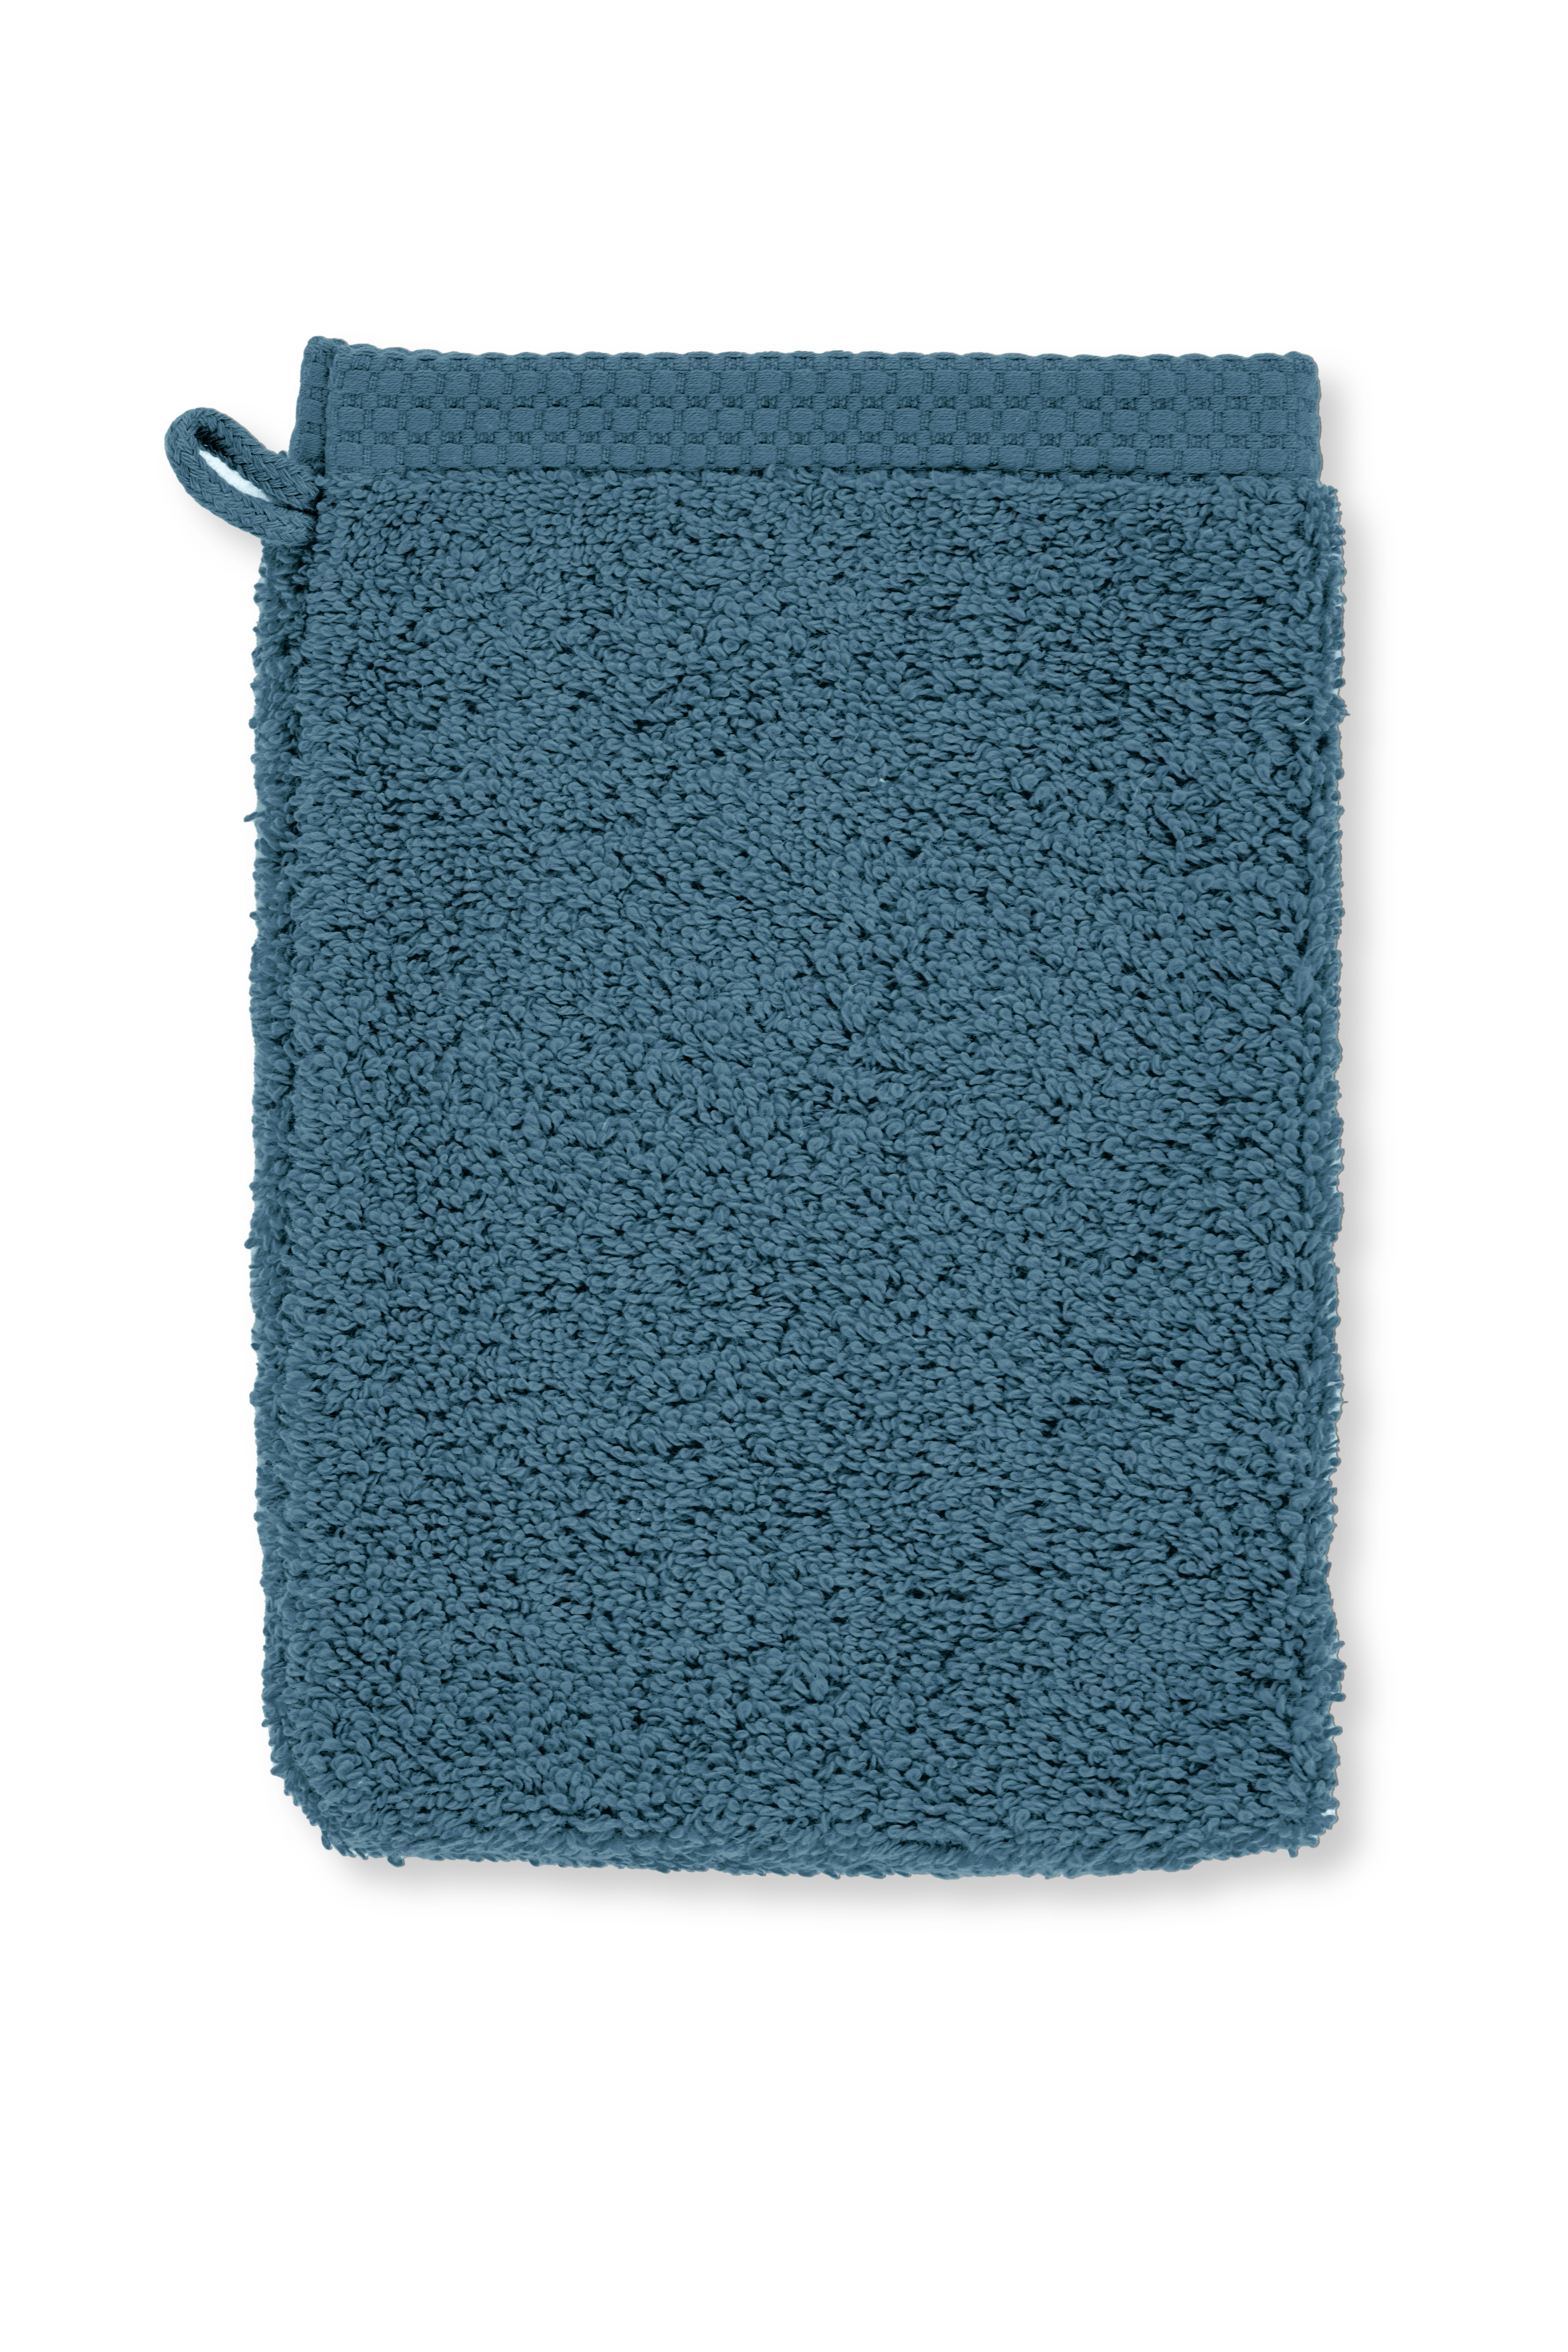 Washing glove DELUX 15x21cm - set/2, turquoise